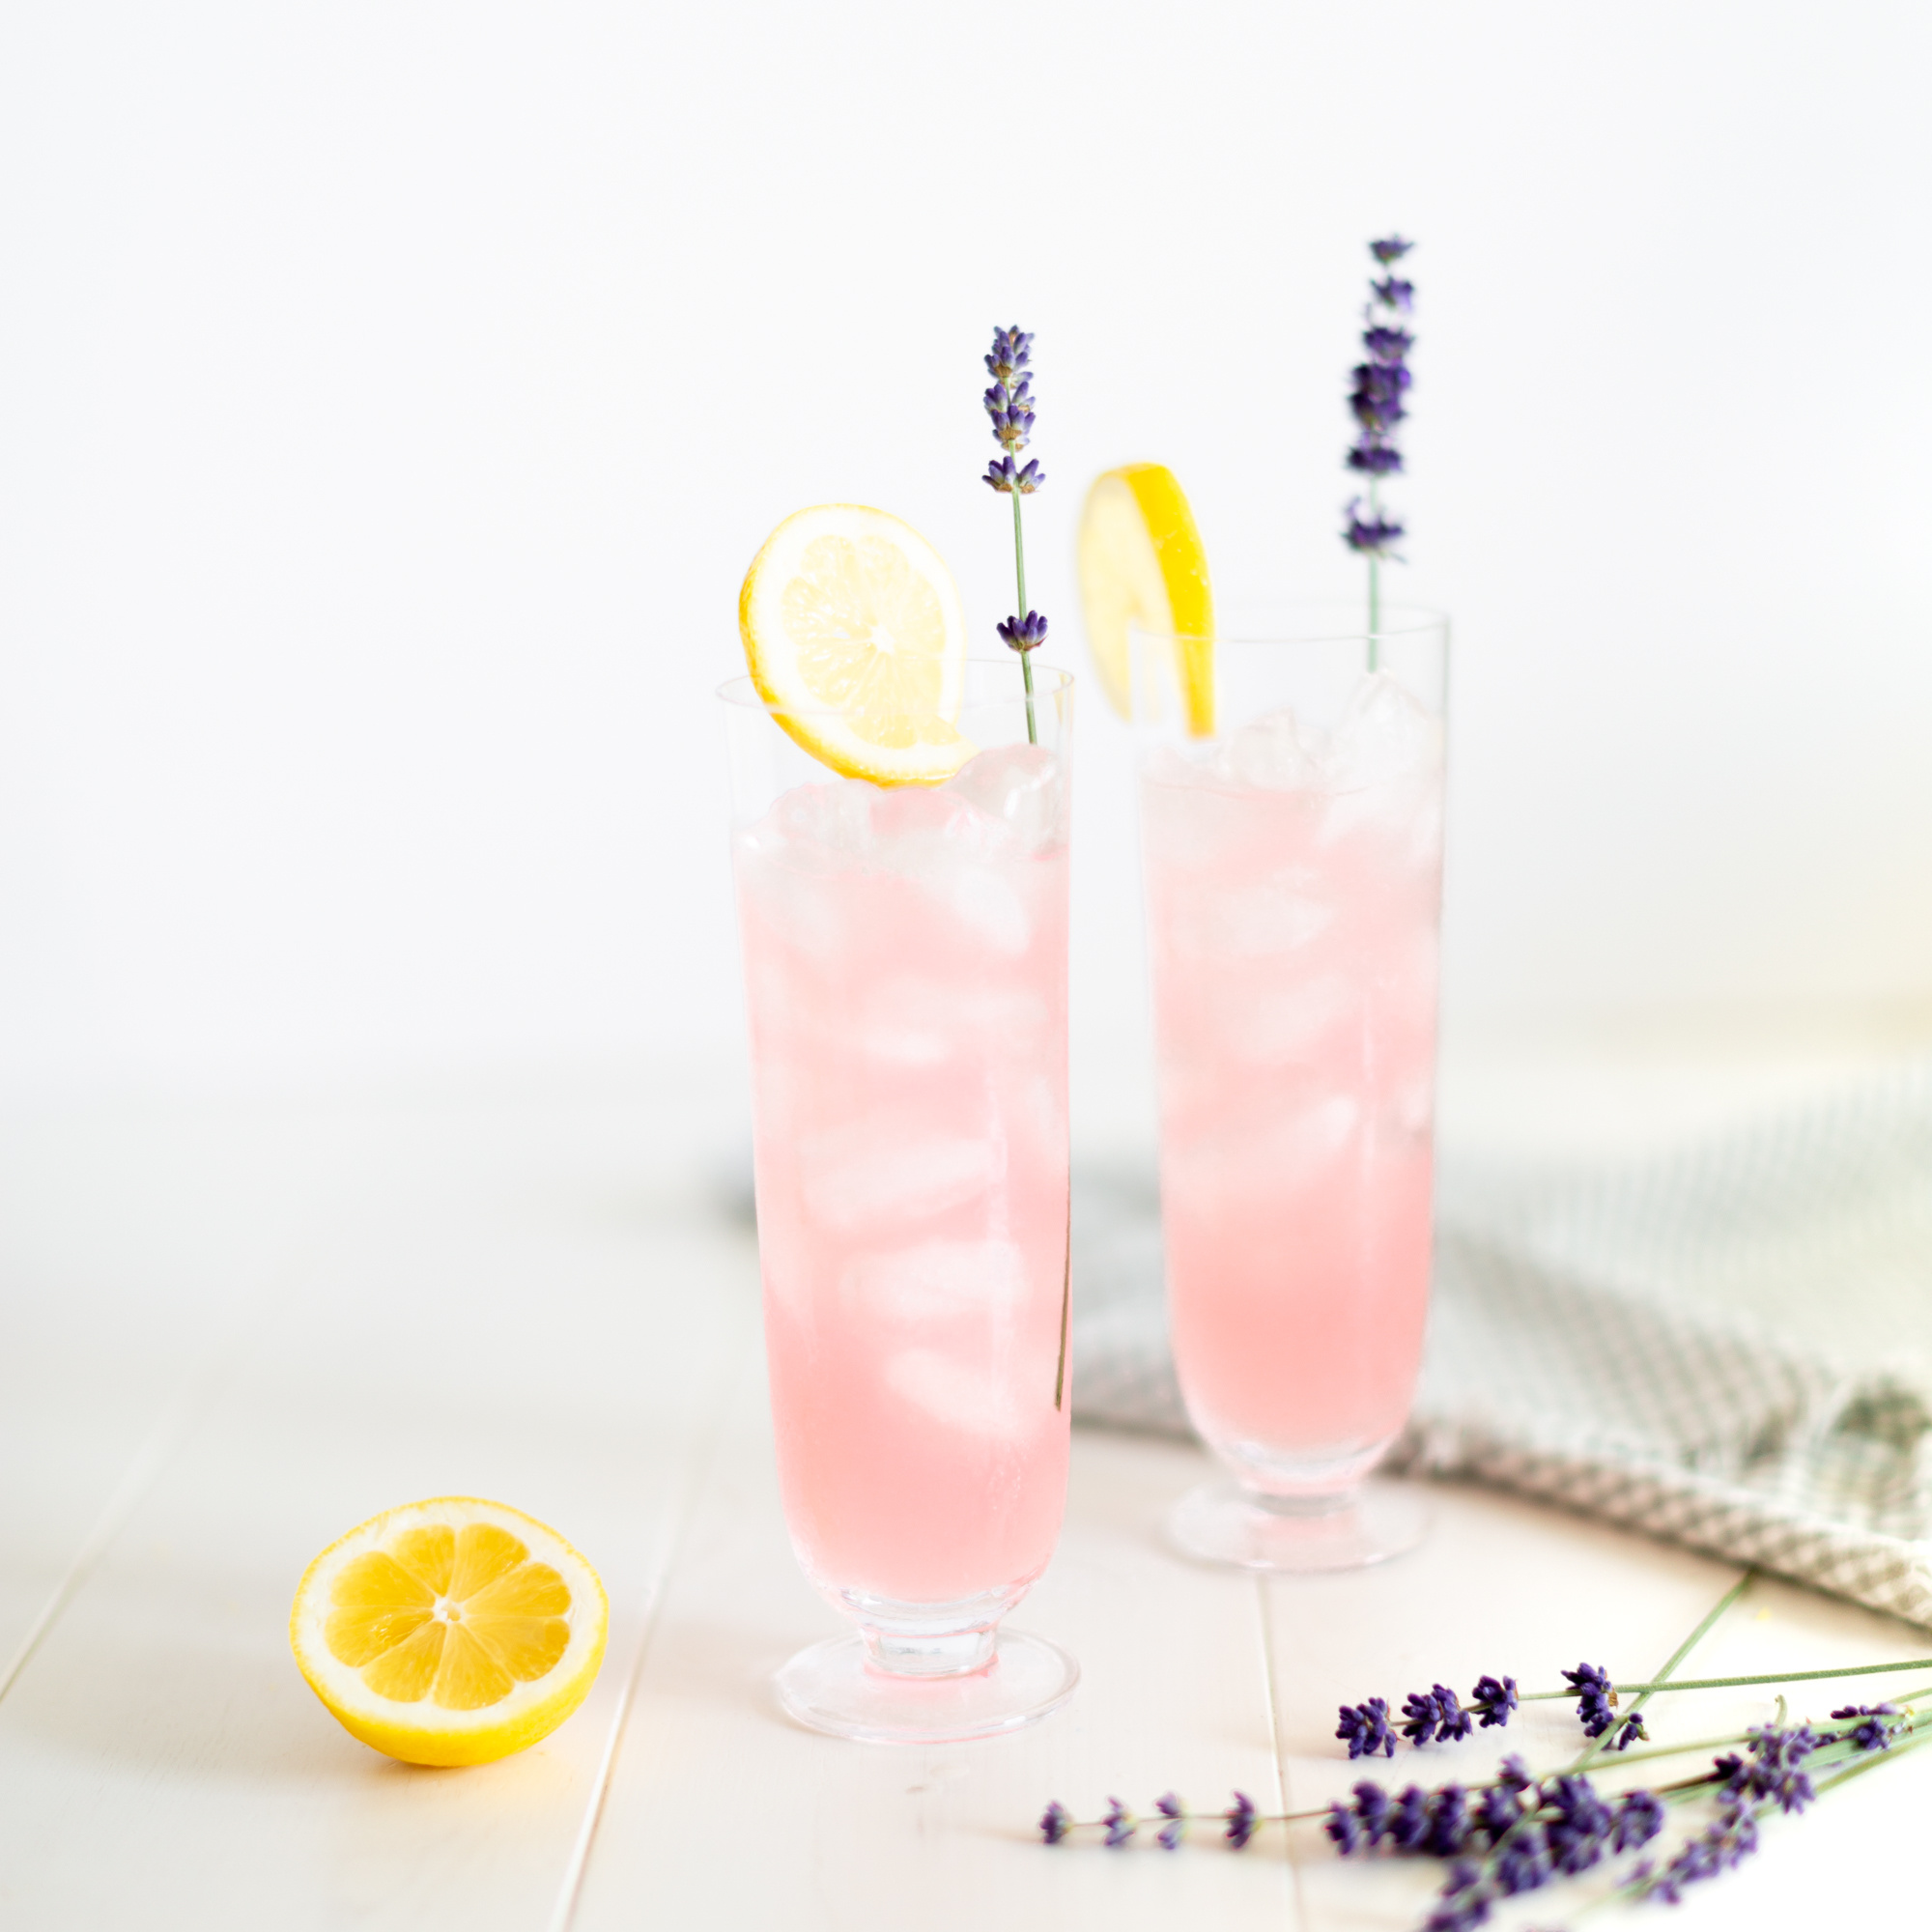 Lemonade: Lavender beverage, Comes in bottled or powdered forms. 2000x2000 HD Wallpaper.